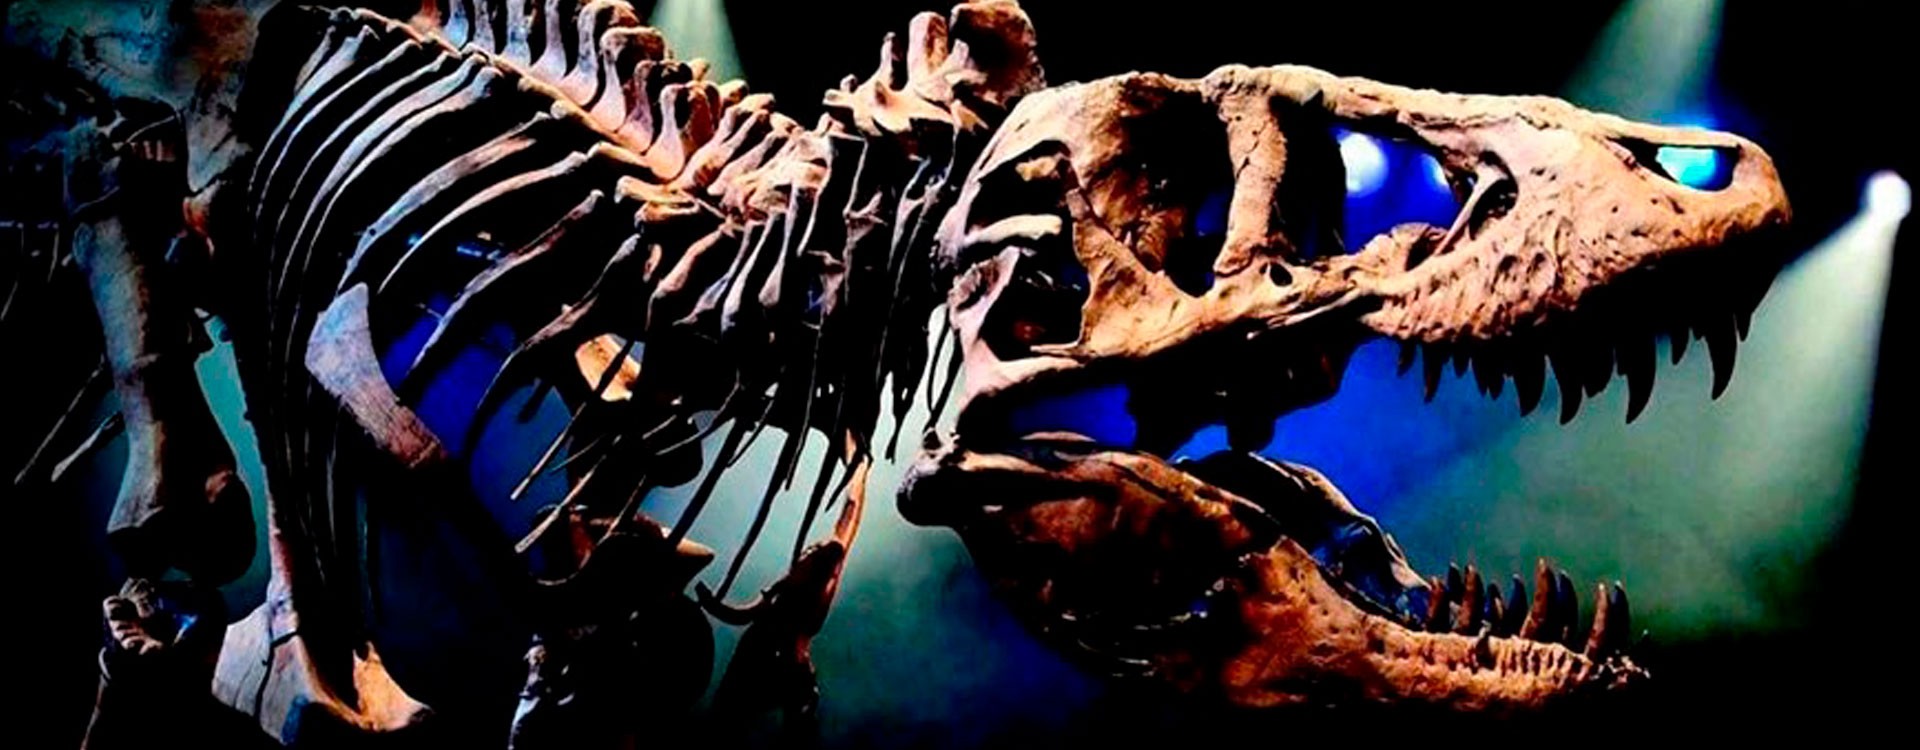 Недостающие кости скелета Тираннозавра T-REX возобновили посредством 3D печати